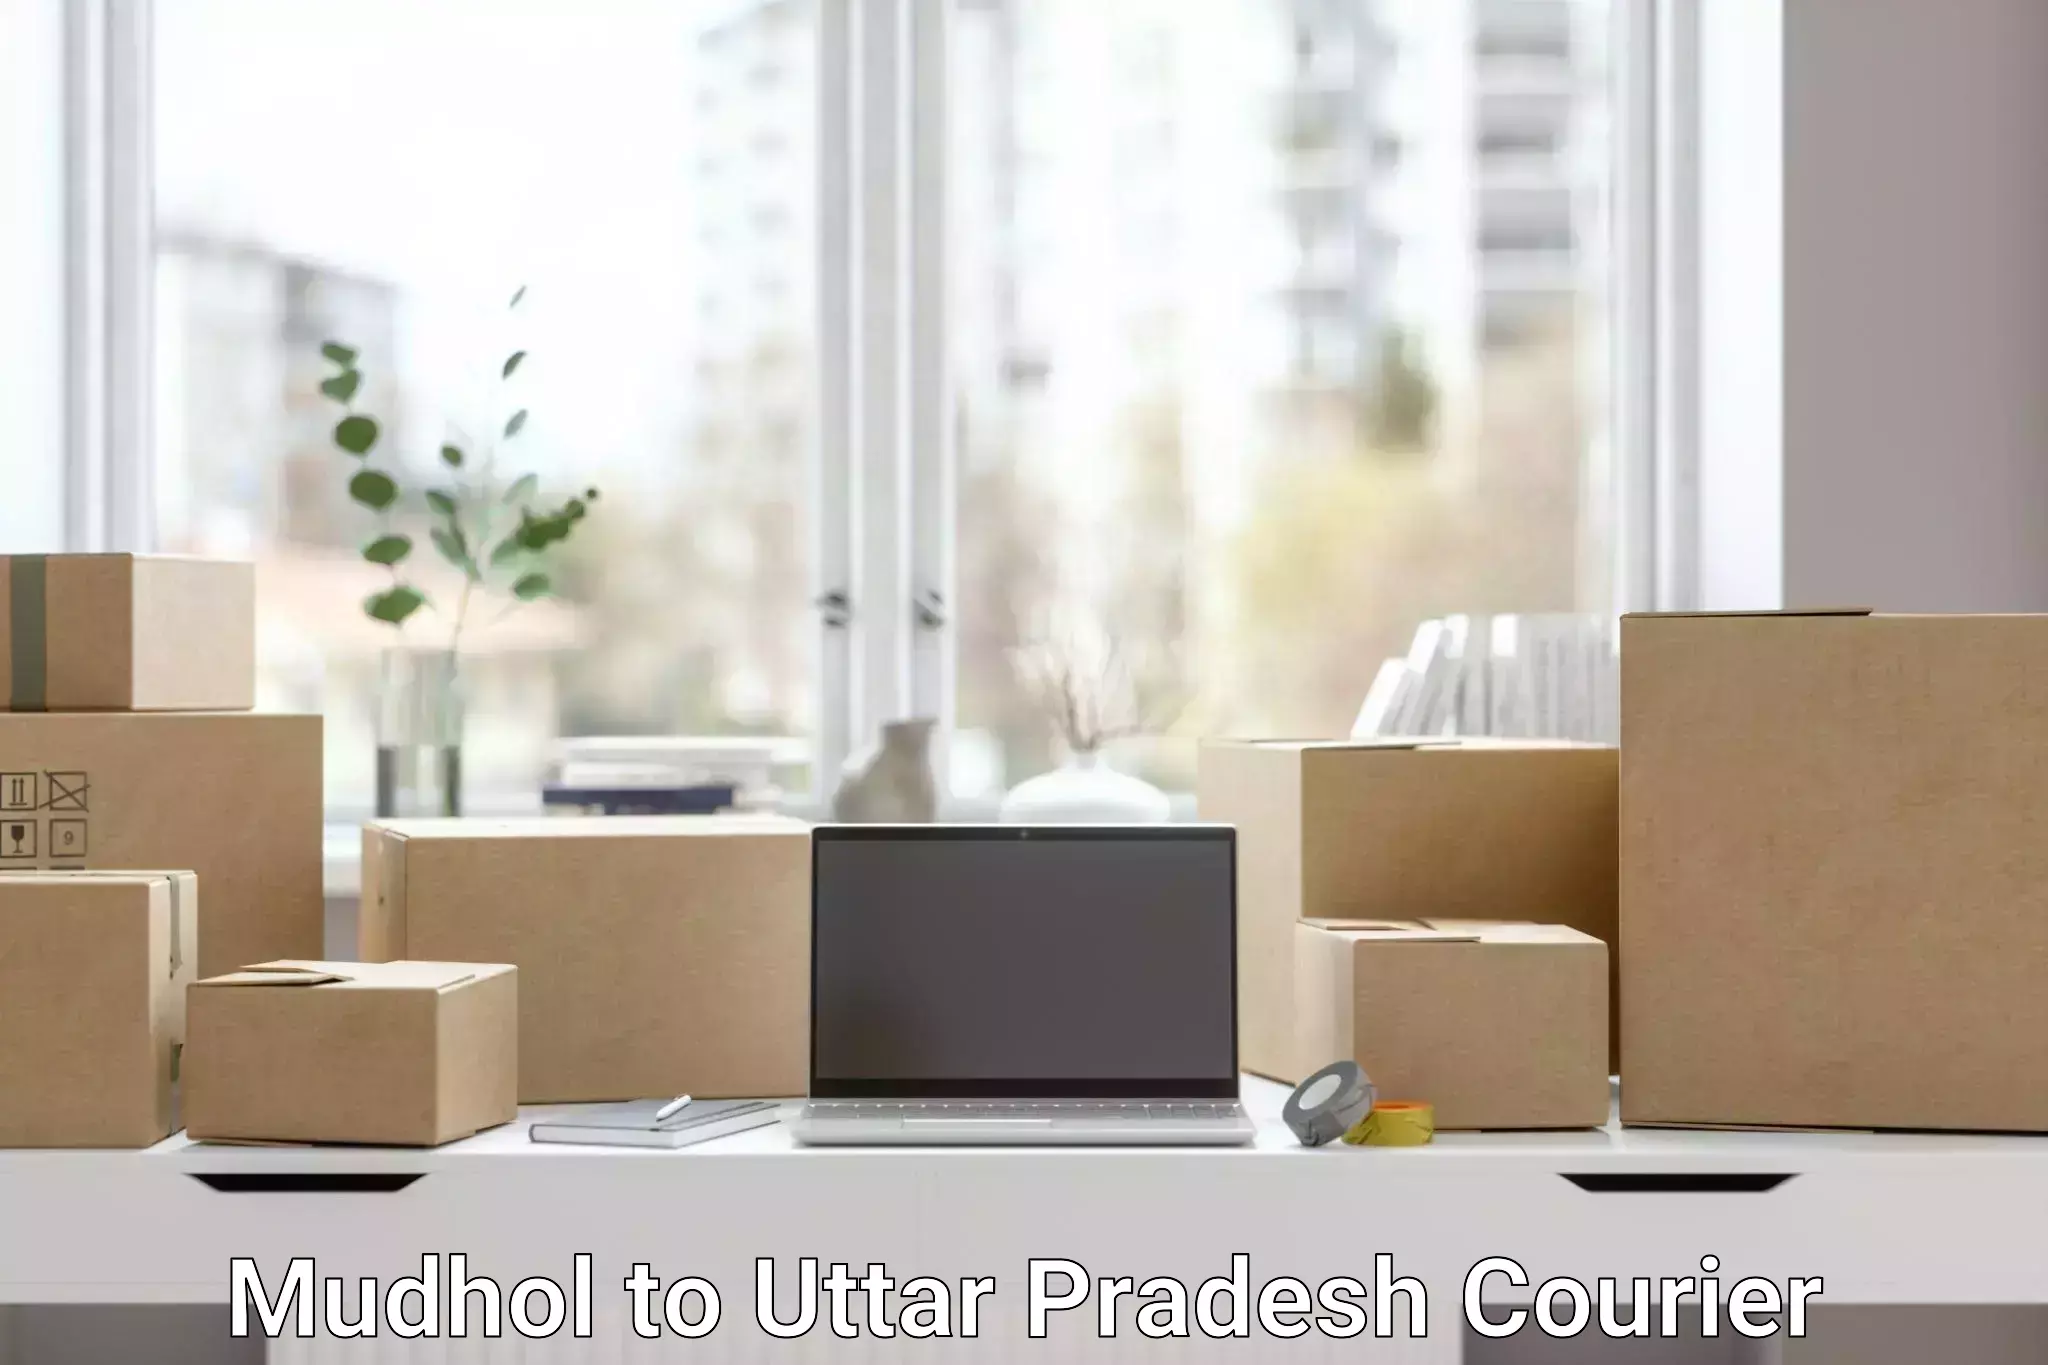 Logistics service provider Mudhol to Uttar Pradesh